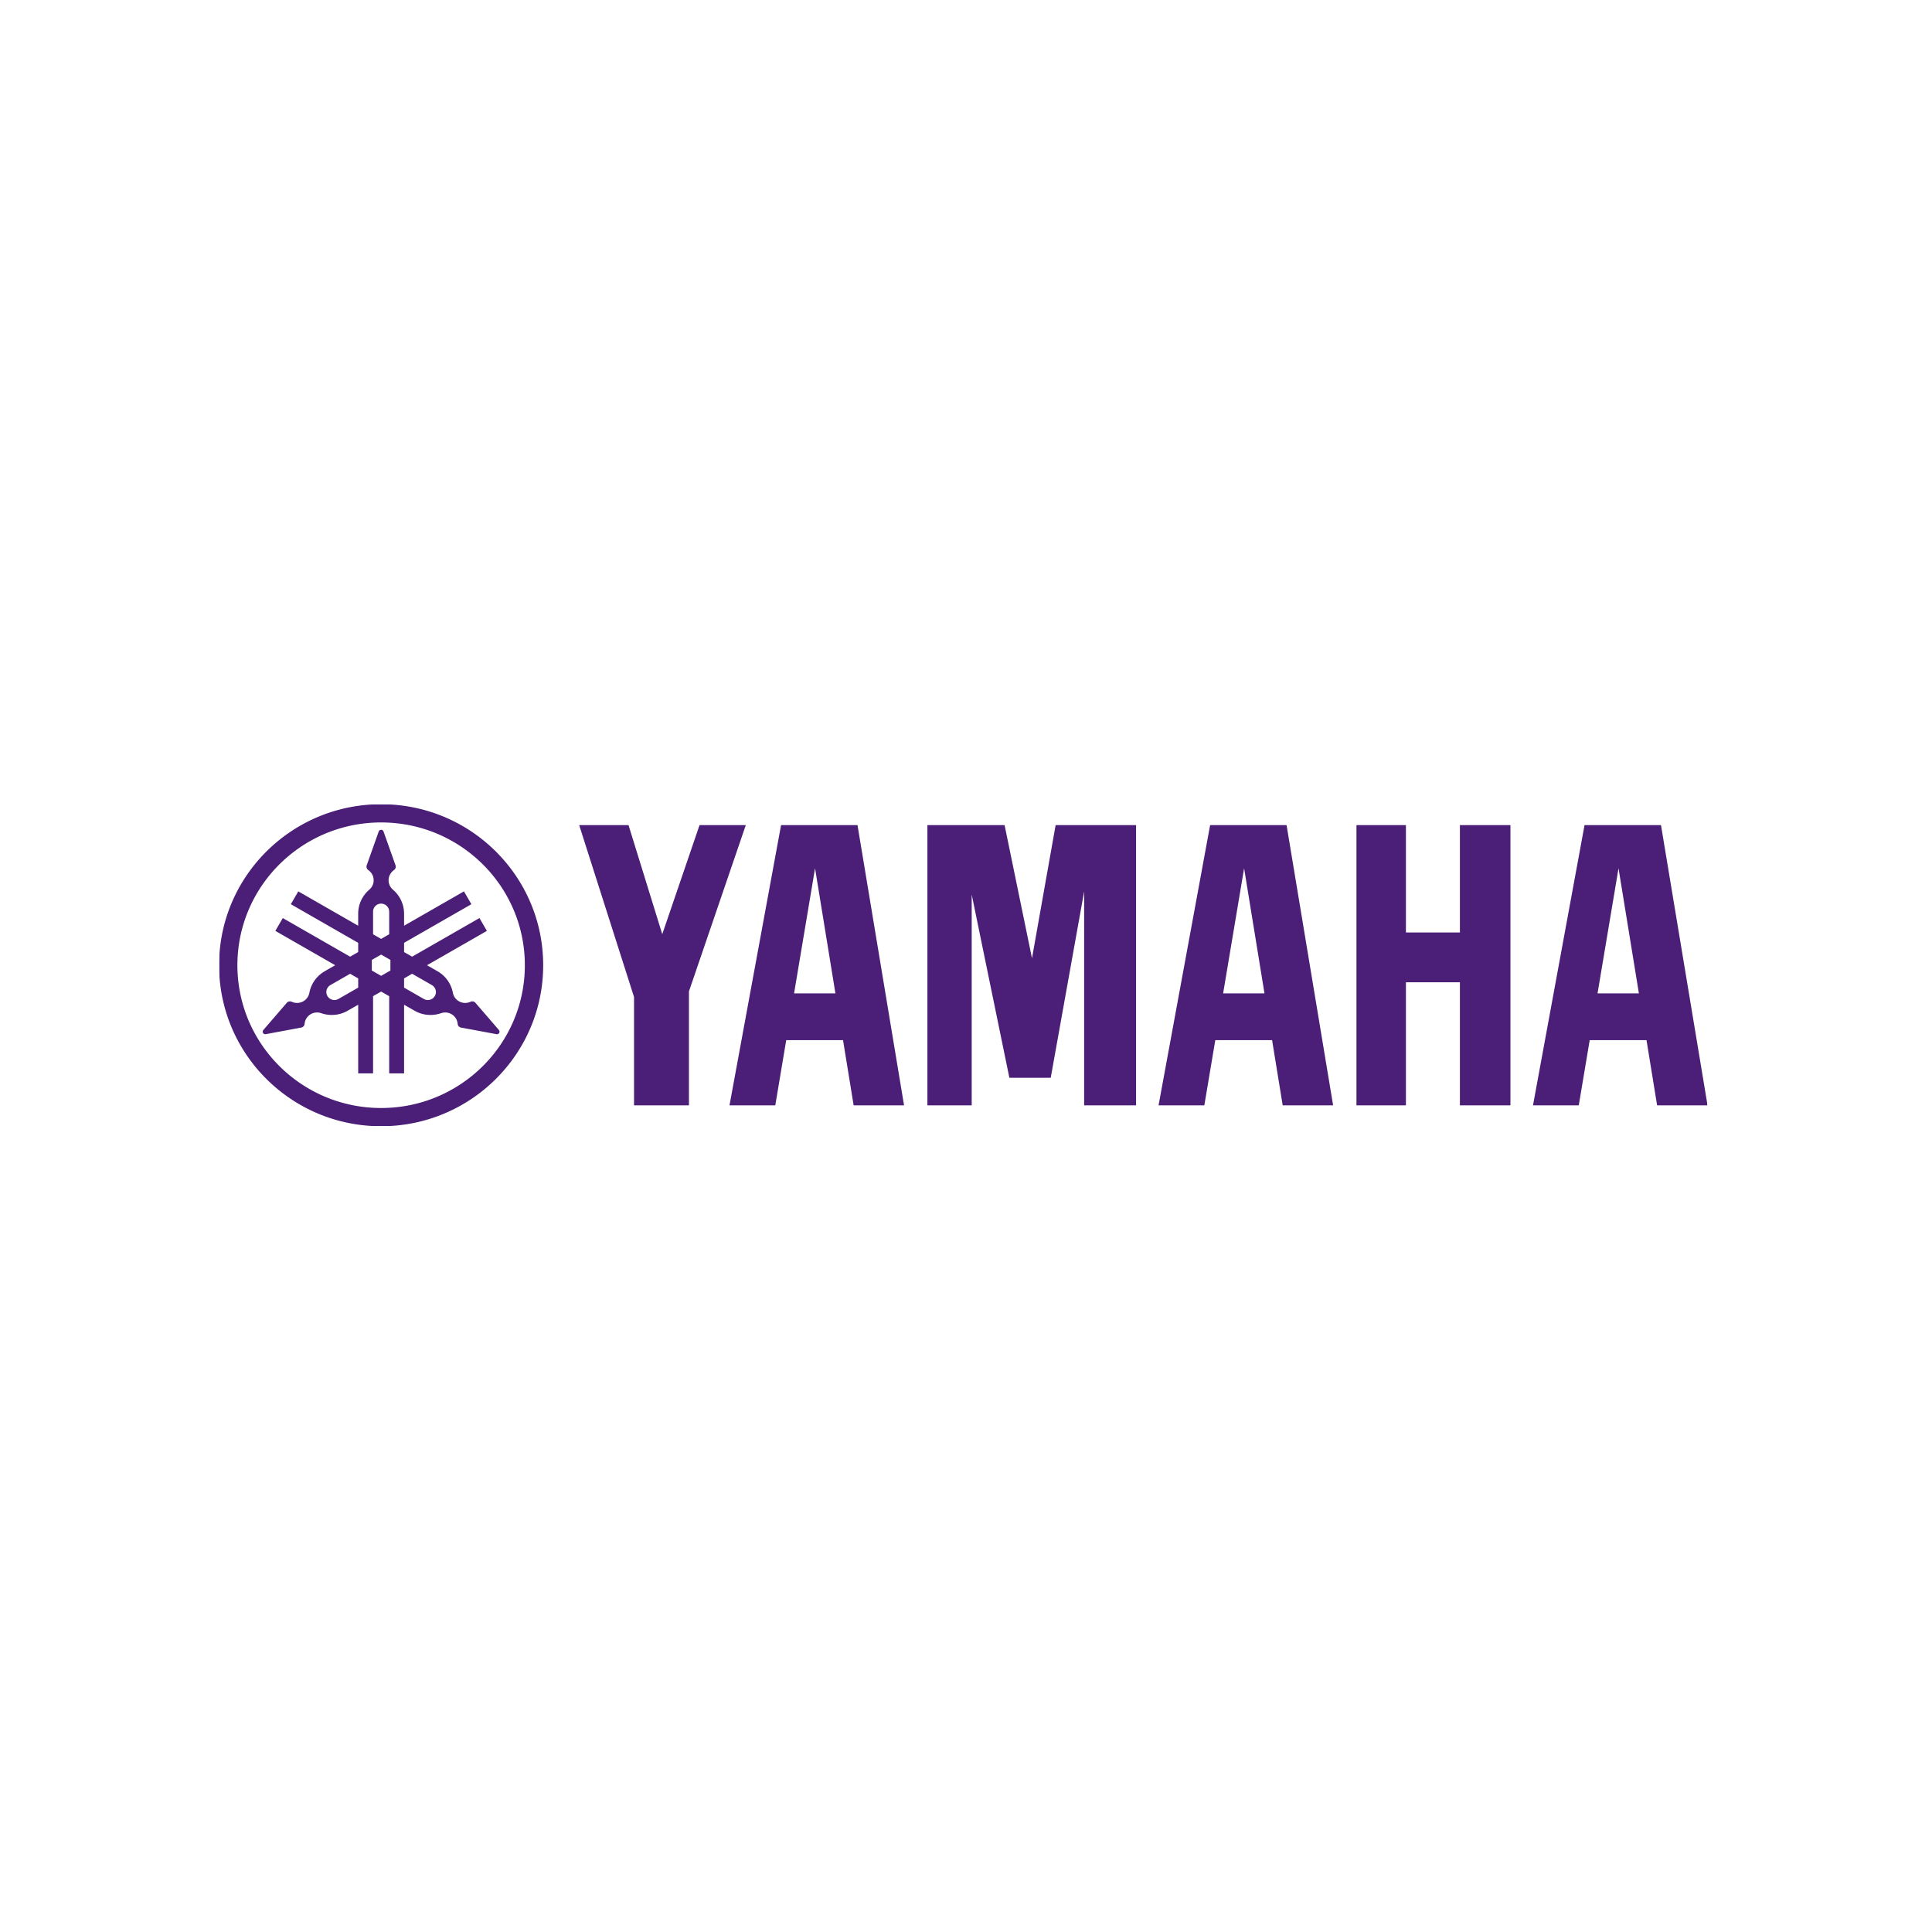 www.yamaha.com